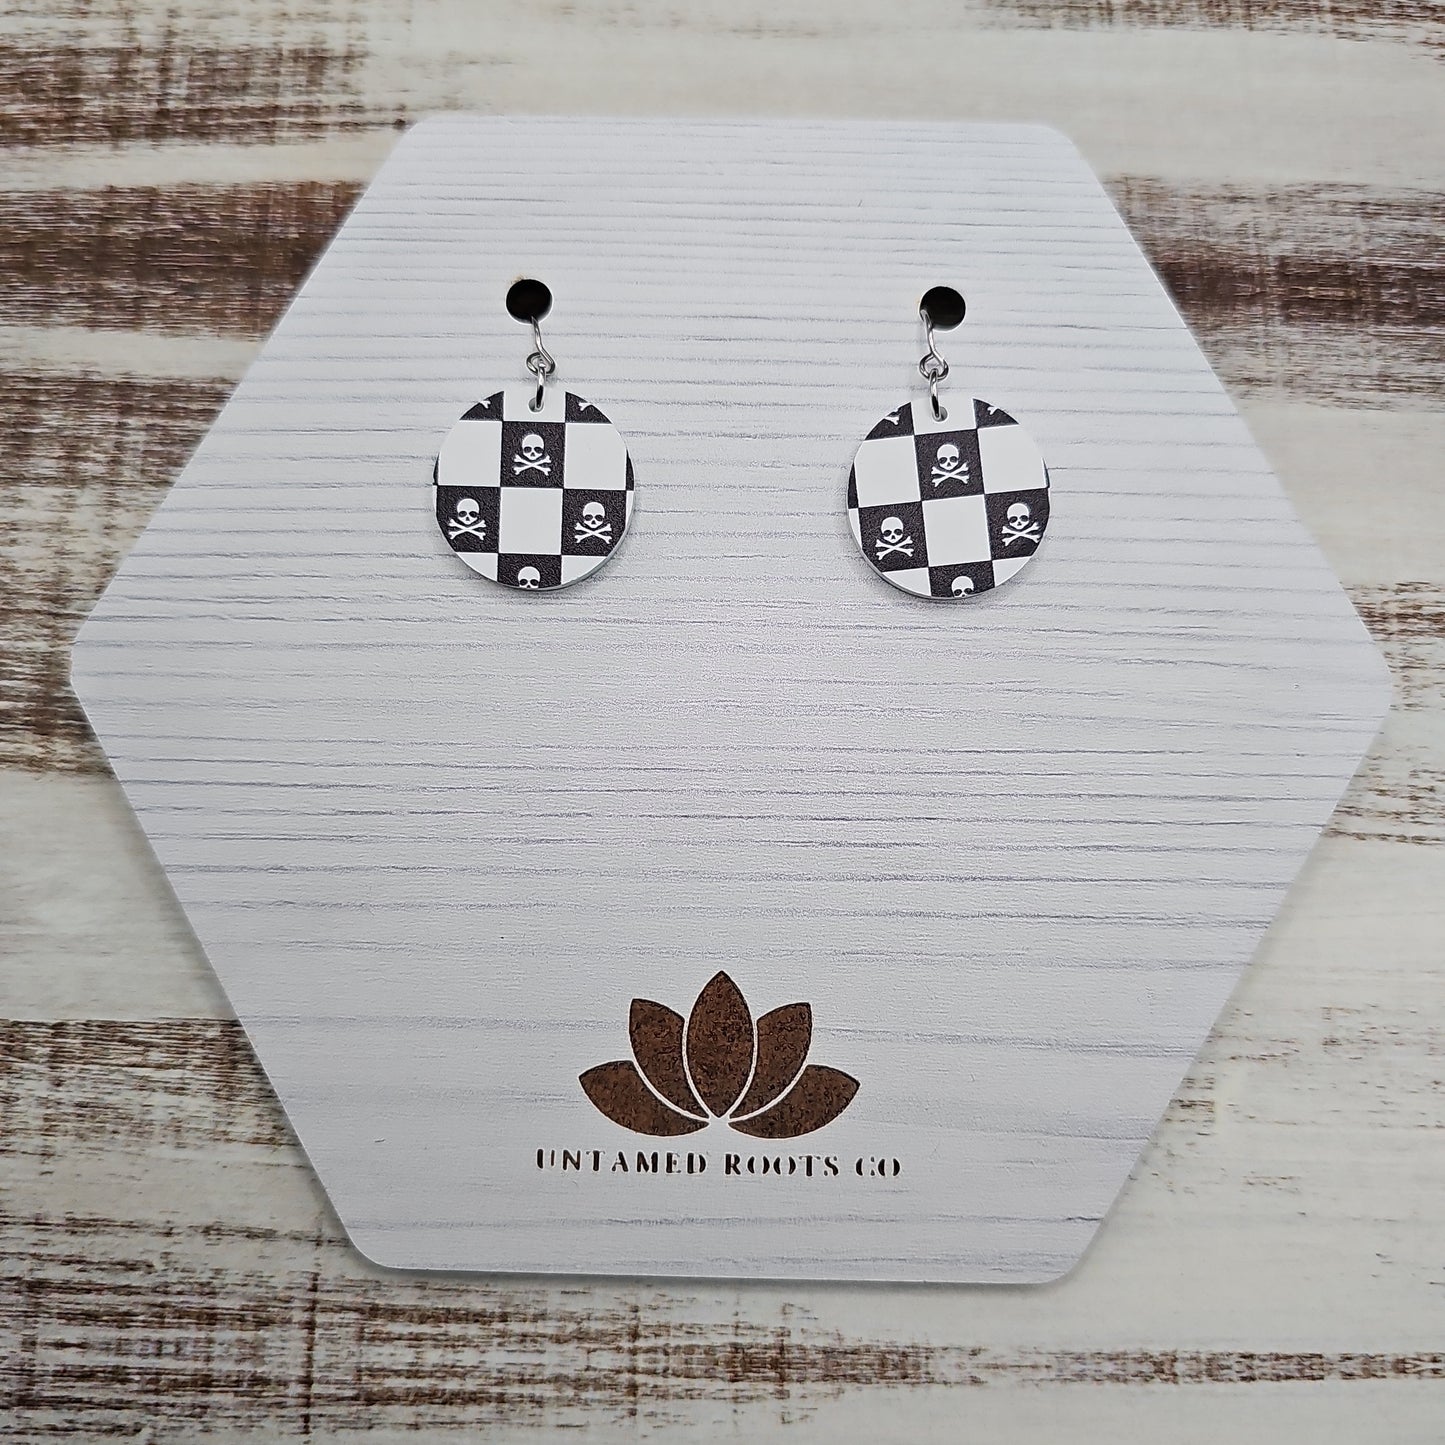 Checkerboard Skull Print Earrings (8 styles)